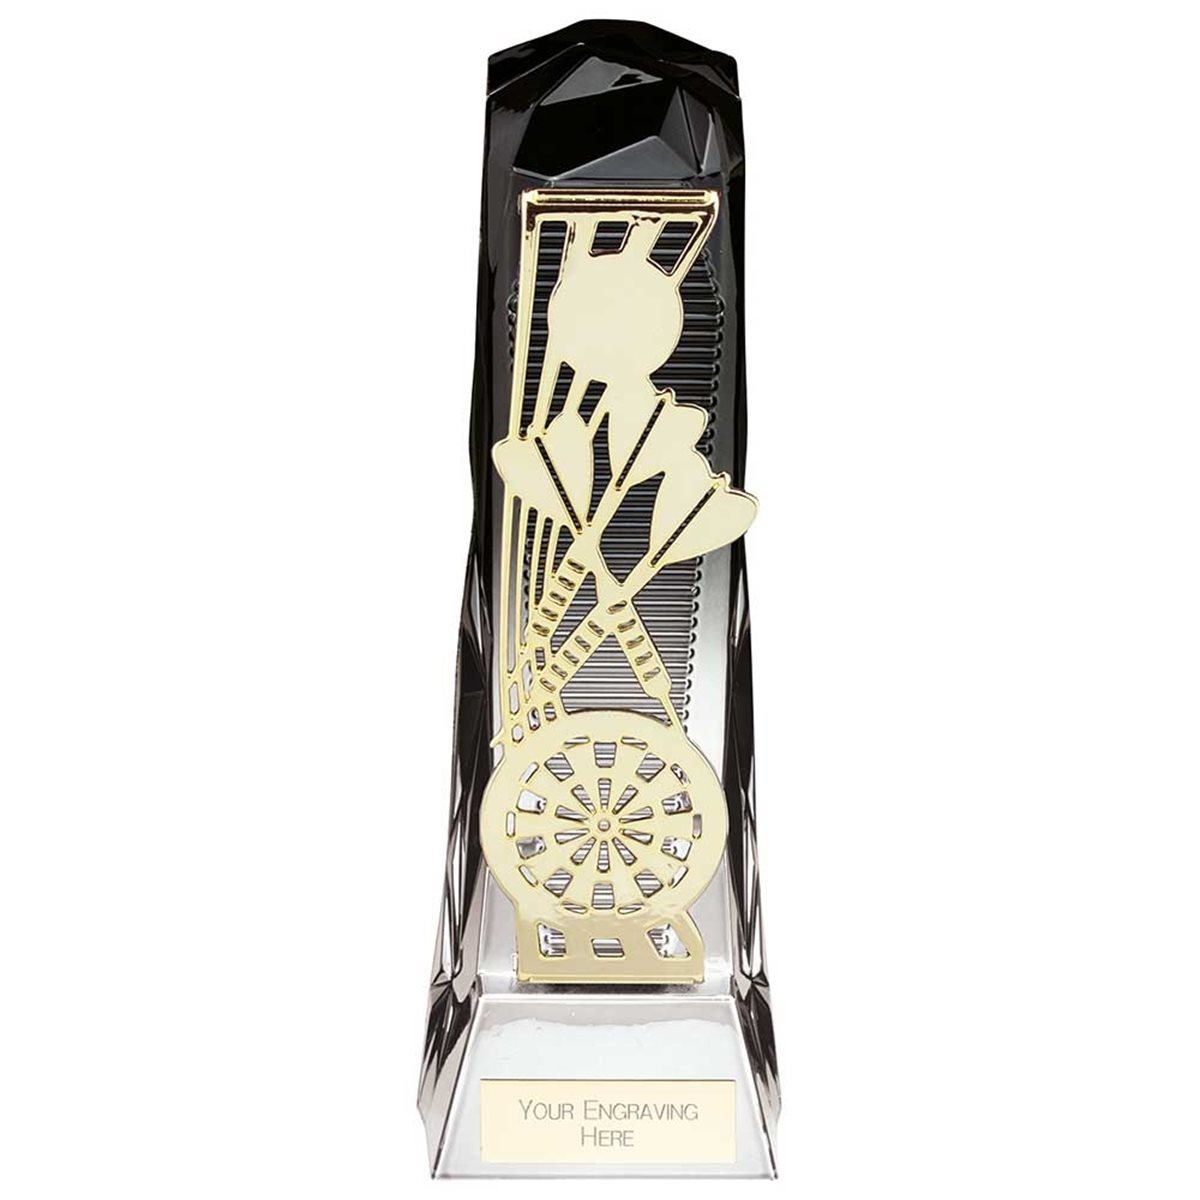 Fusion Shard Darts Award PA24019